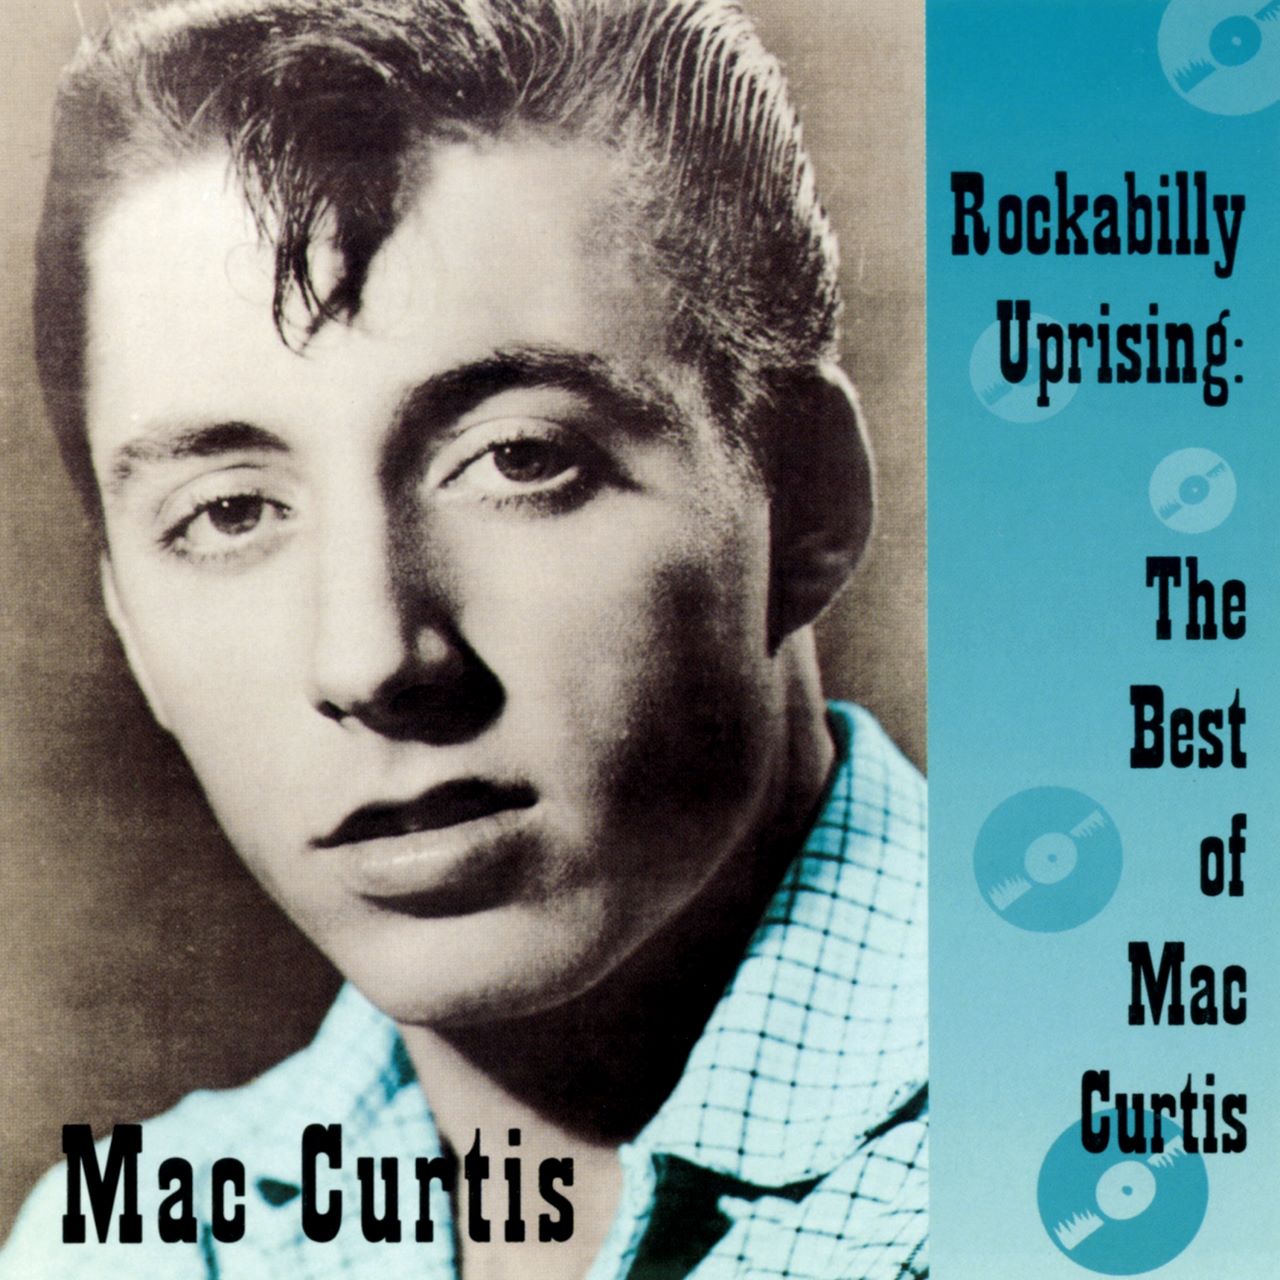 Mac Curtis - Rockabilly Uprising - The Best Of Mac Curtis cover album